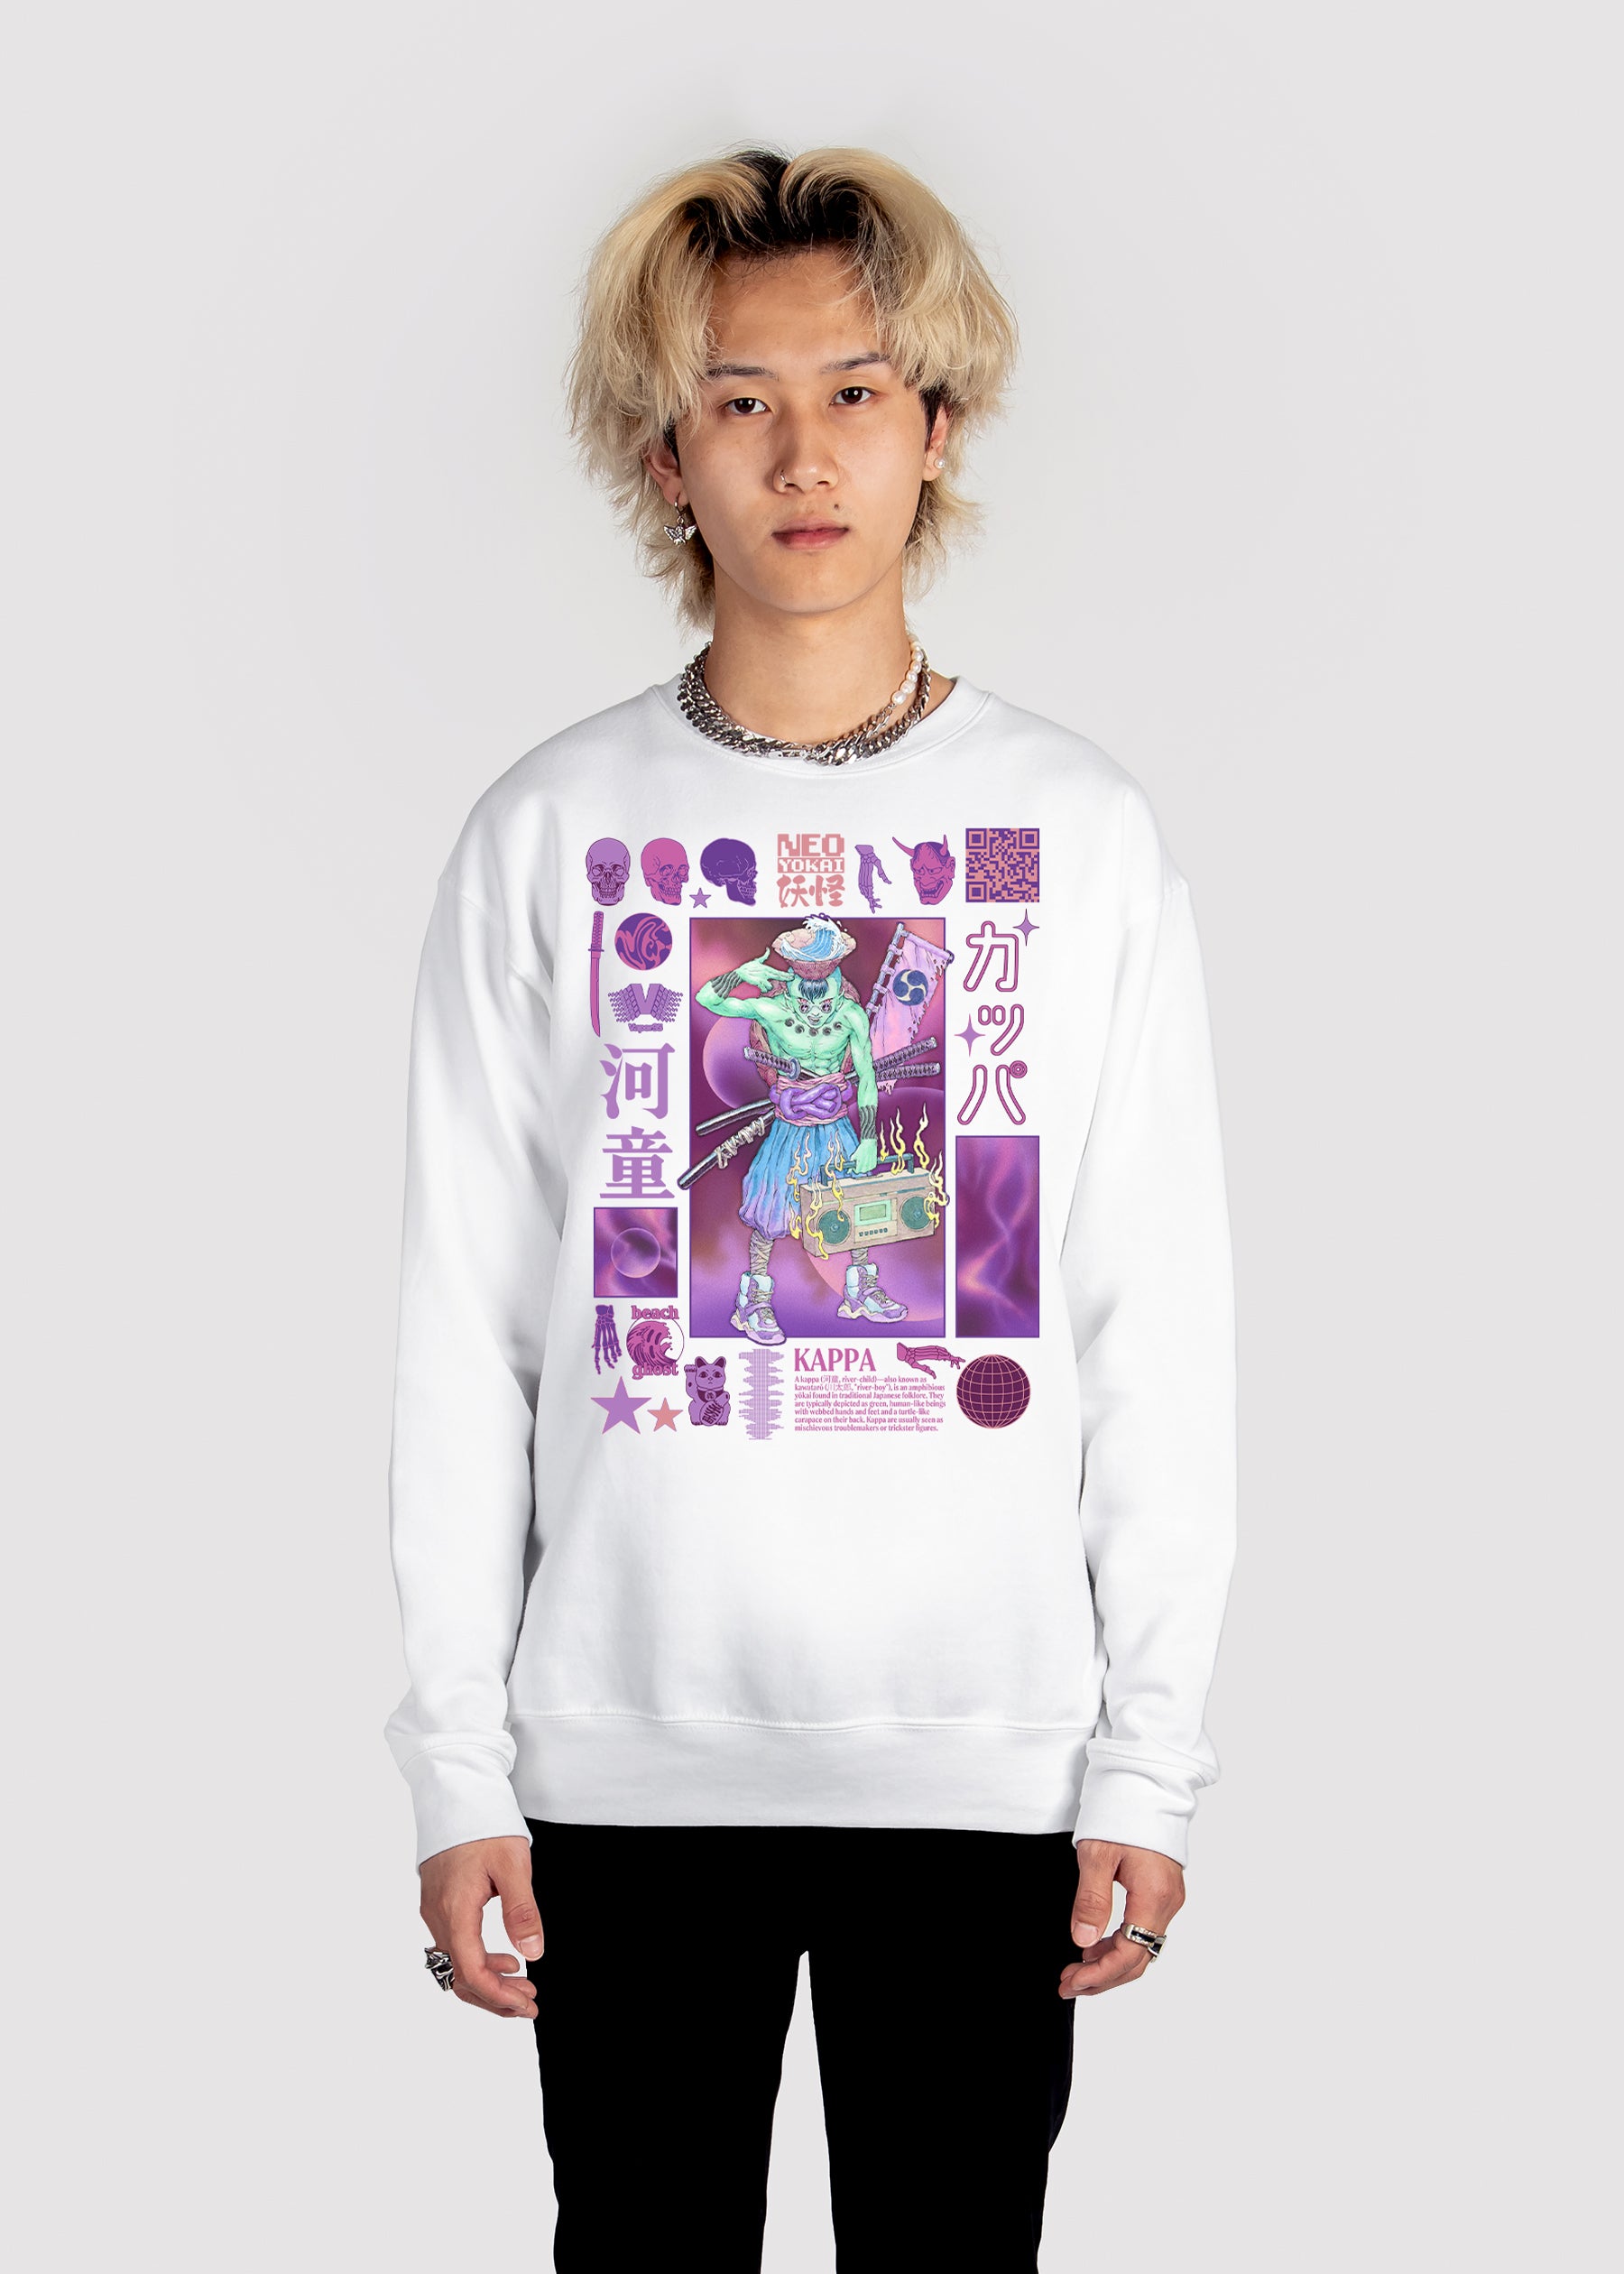 Aesthetic – Vaporwave Vapor95 & Kappa Sweatshirt | Clothing